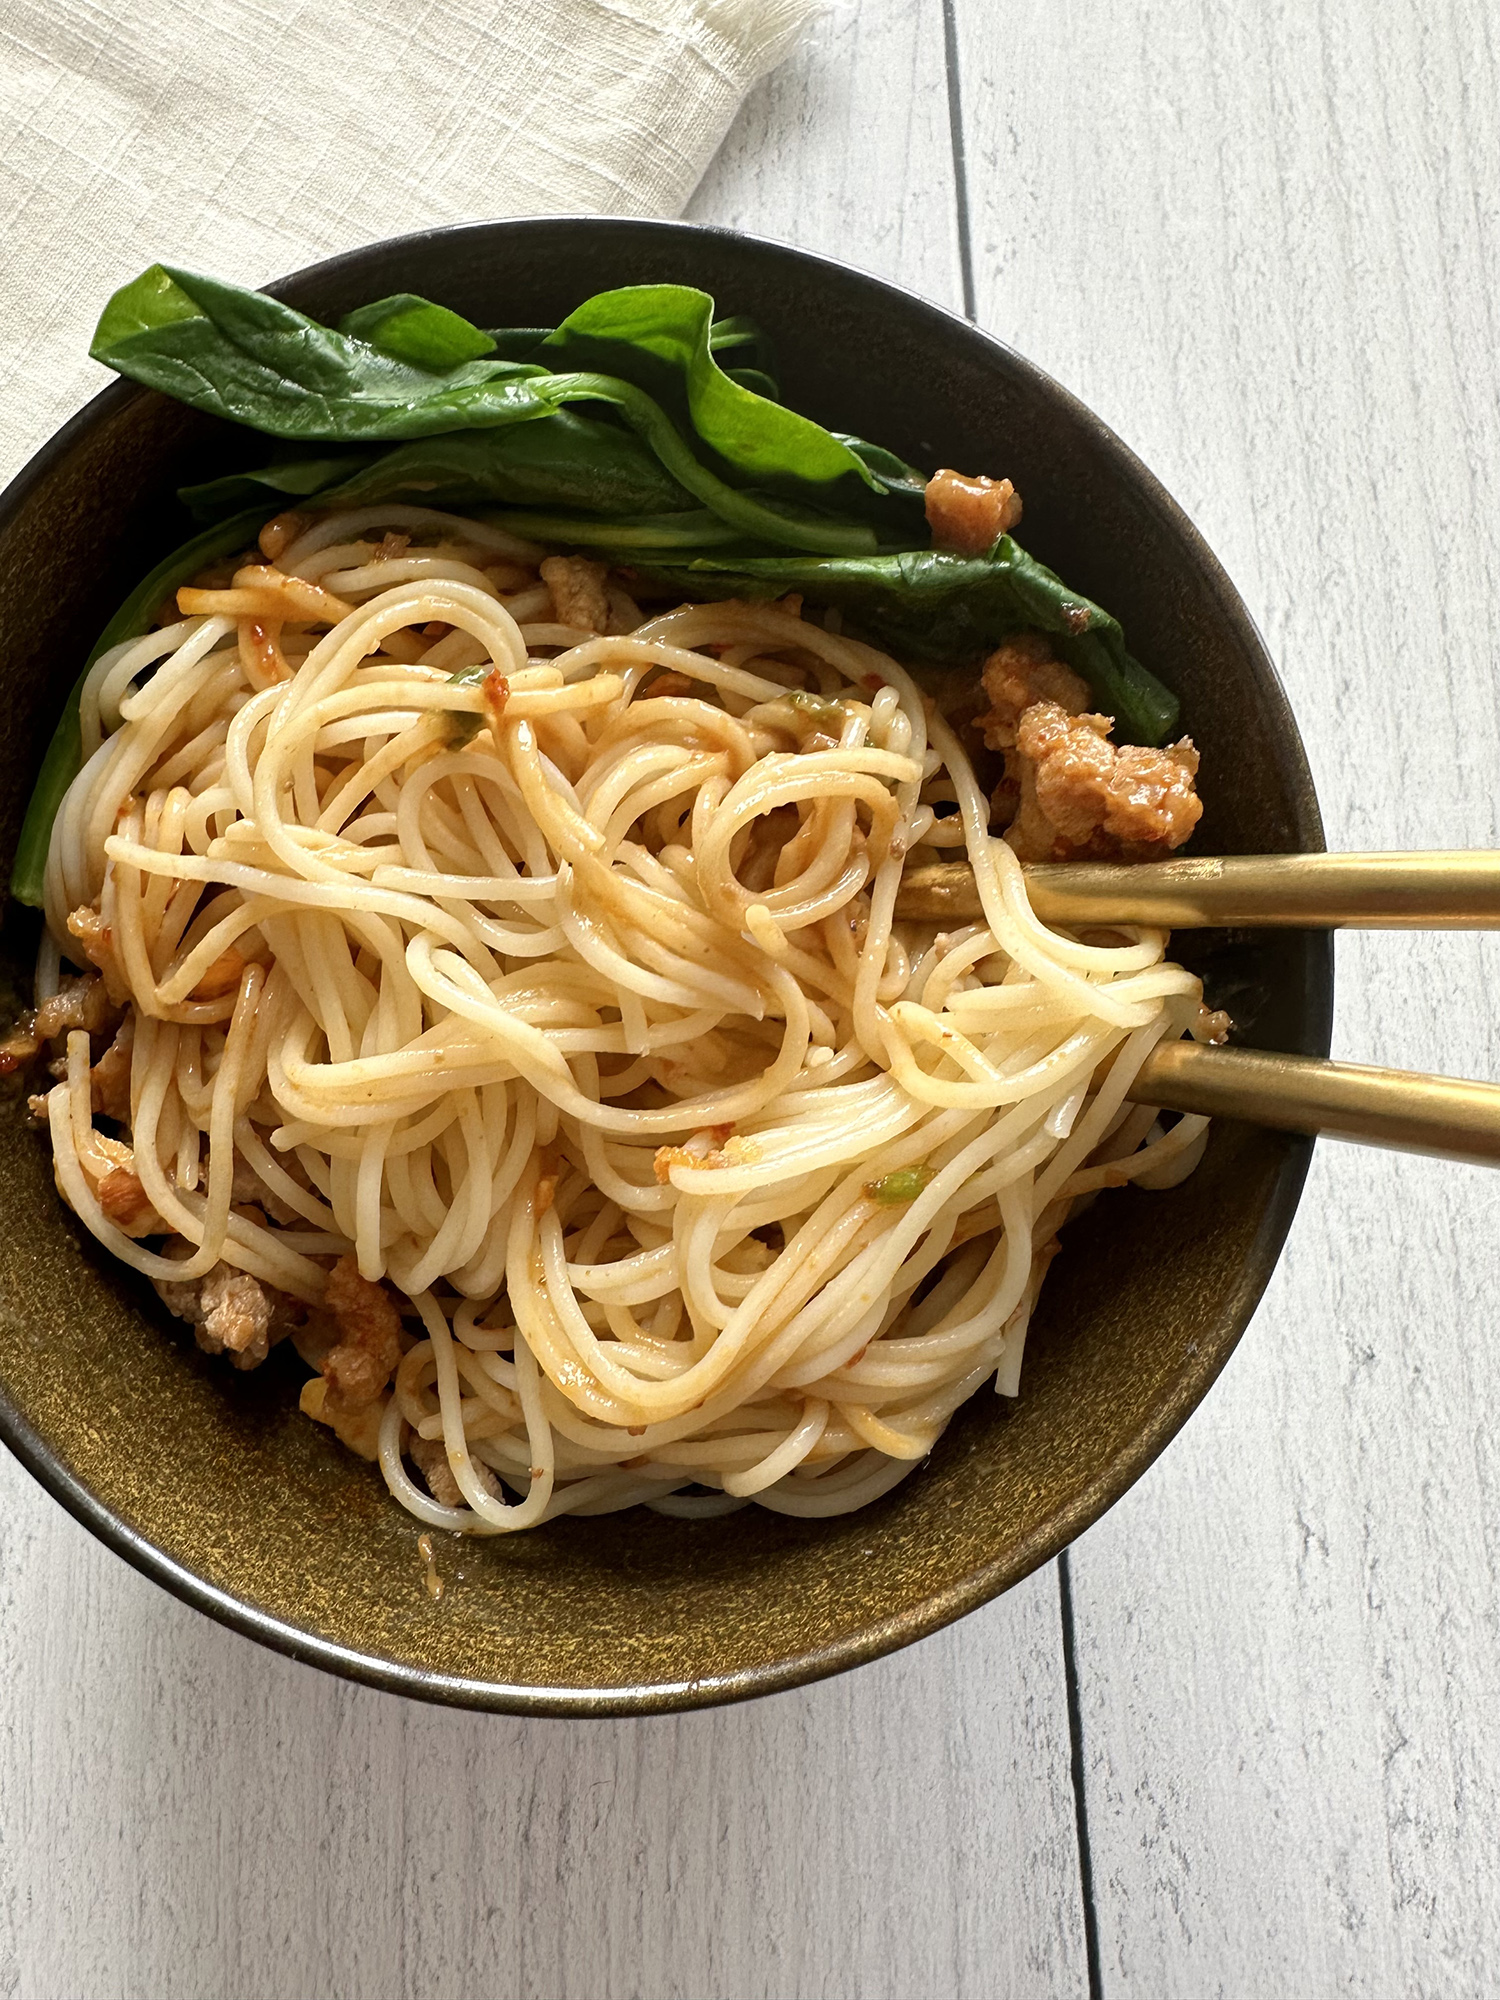 Sichuan Dan Dan Noodles